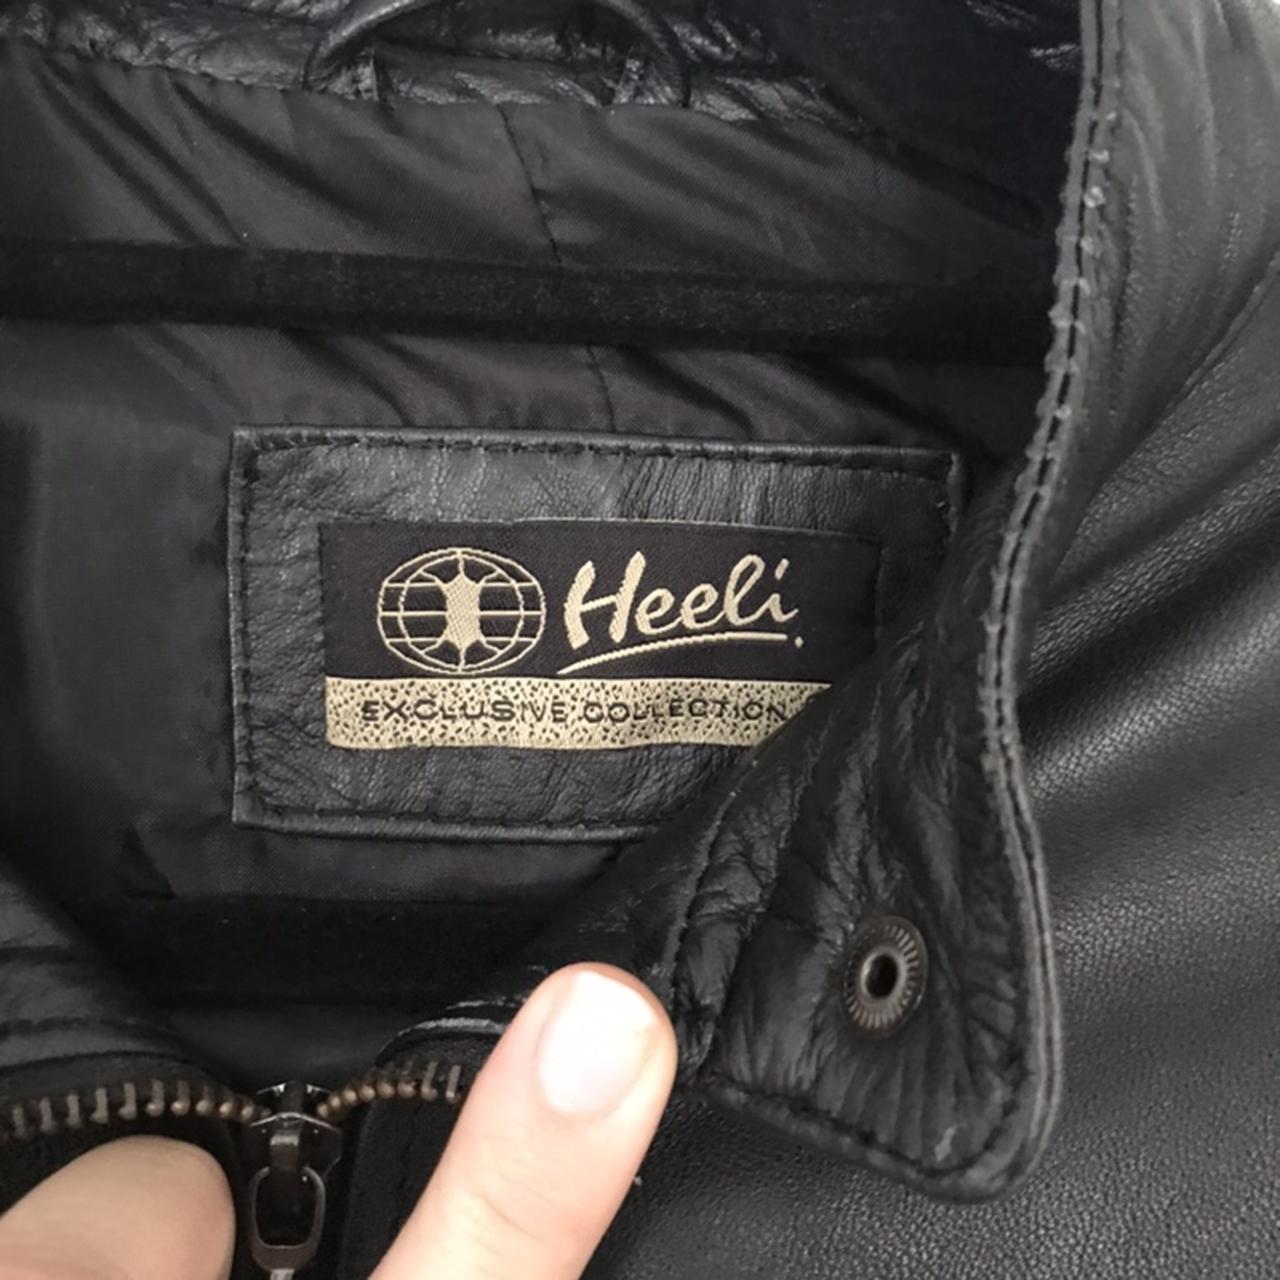 HEELI LEATHER JACKET - Real leather biker jacket 😍... - Depop